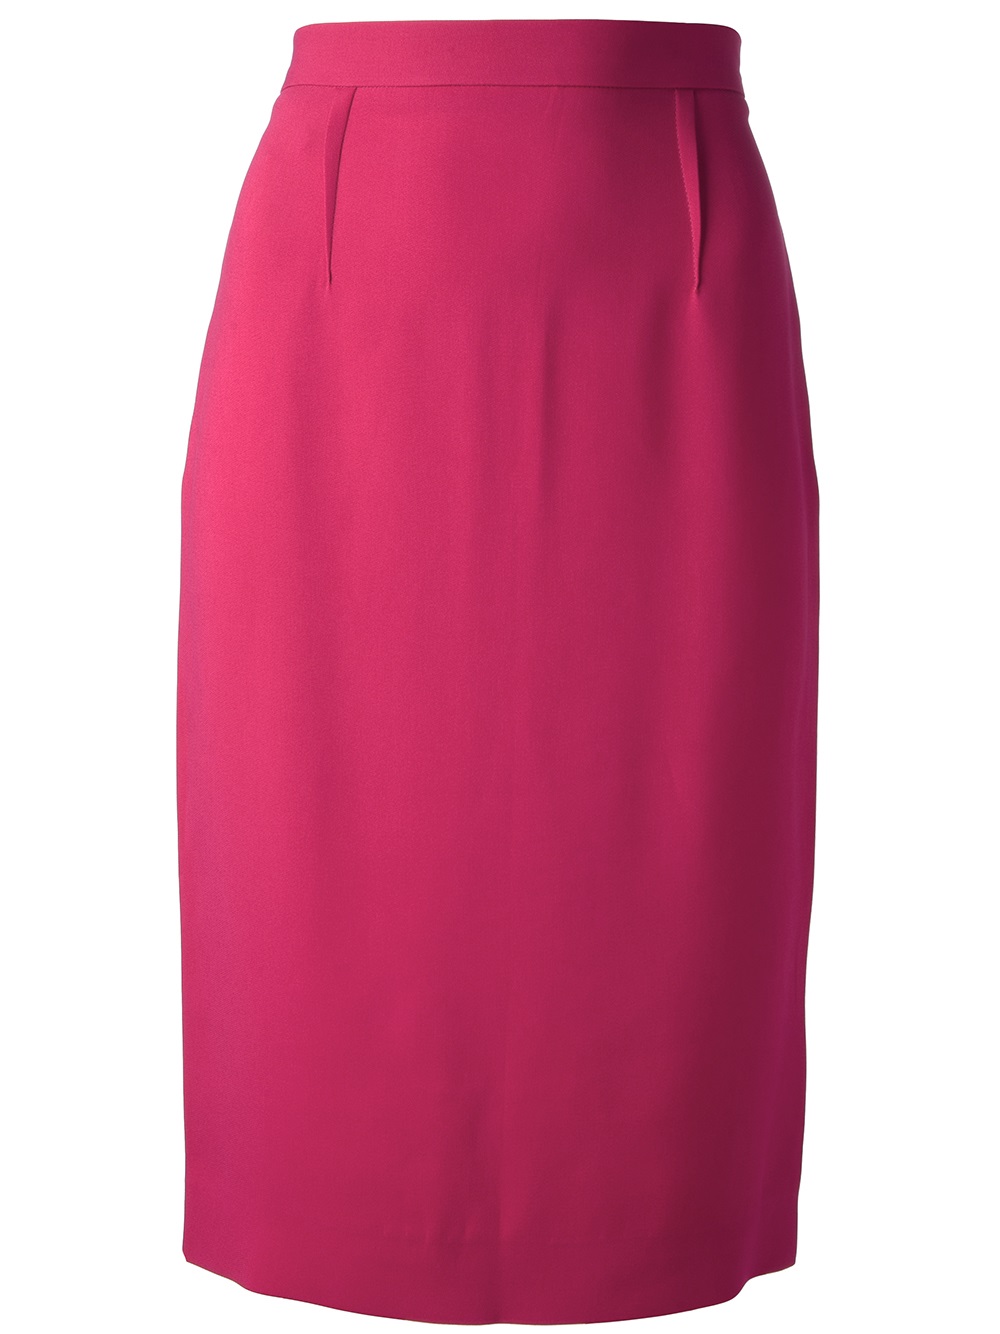 Roland Mouret Zip Pencil Skirt in Fuchsia (Pink) - Lyst